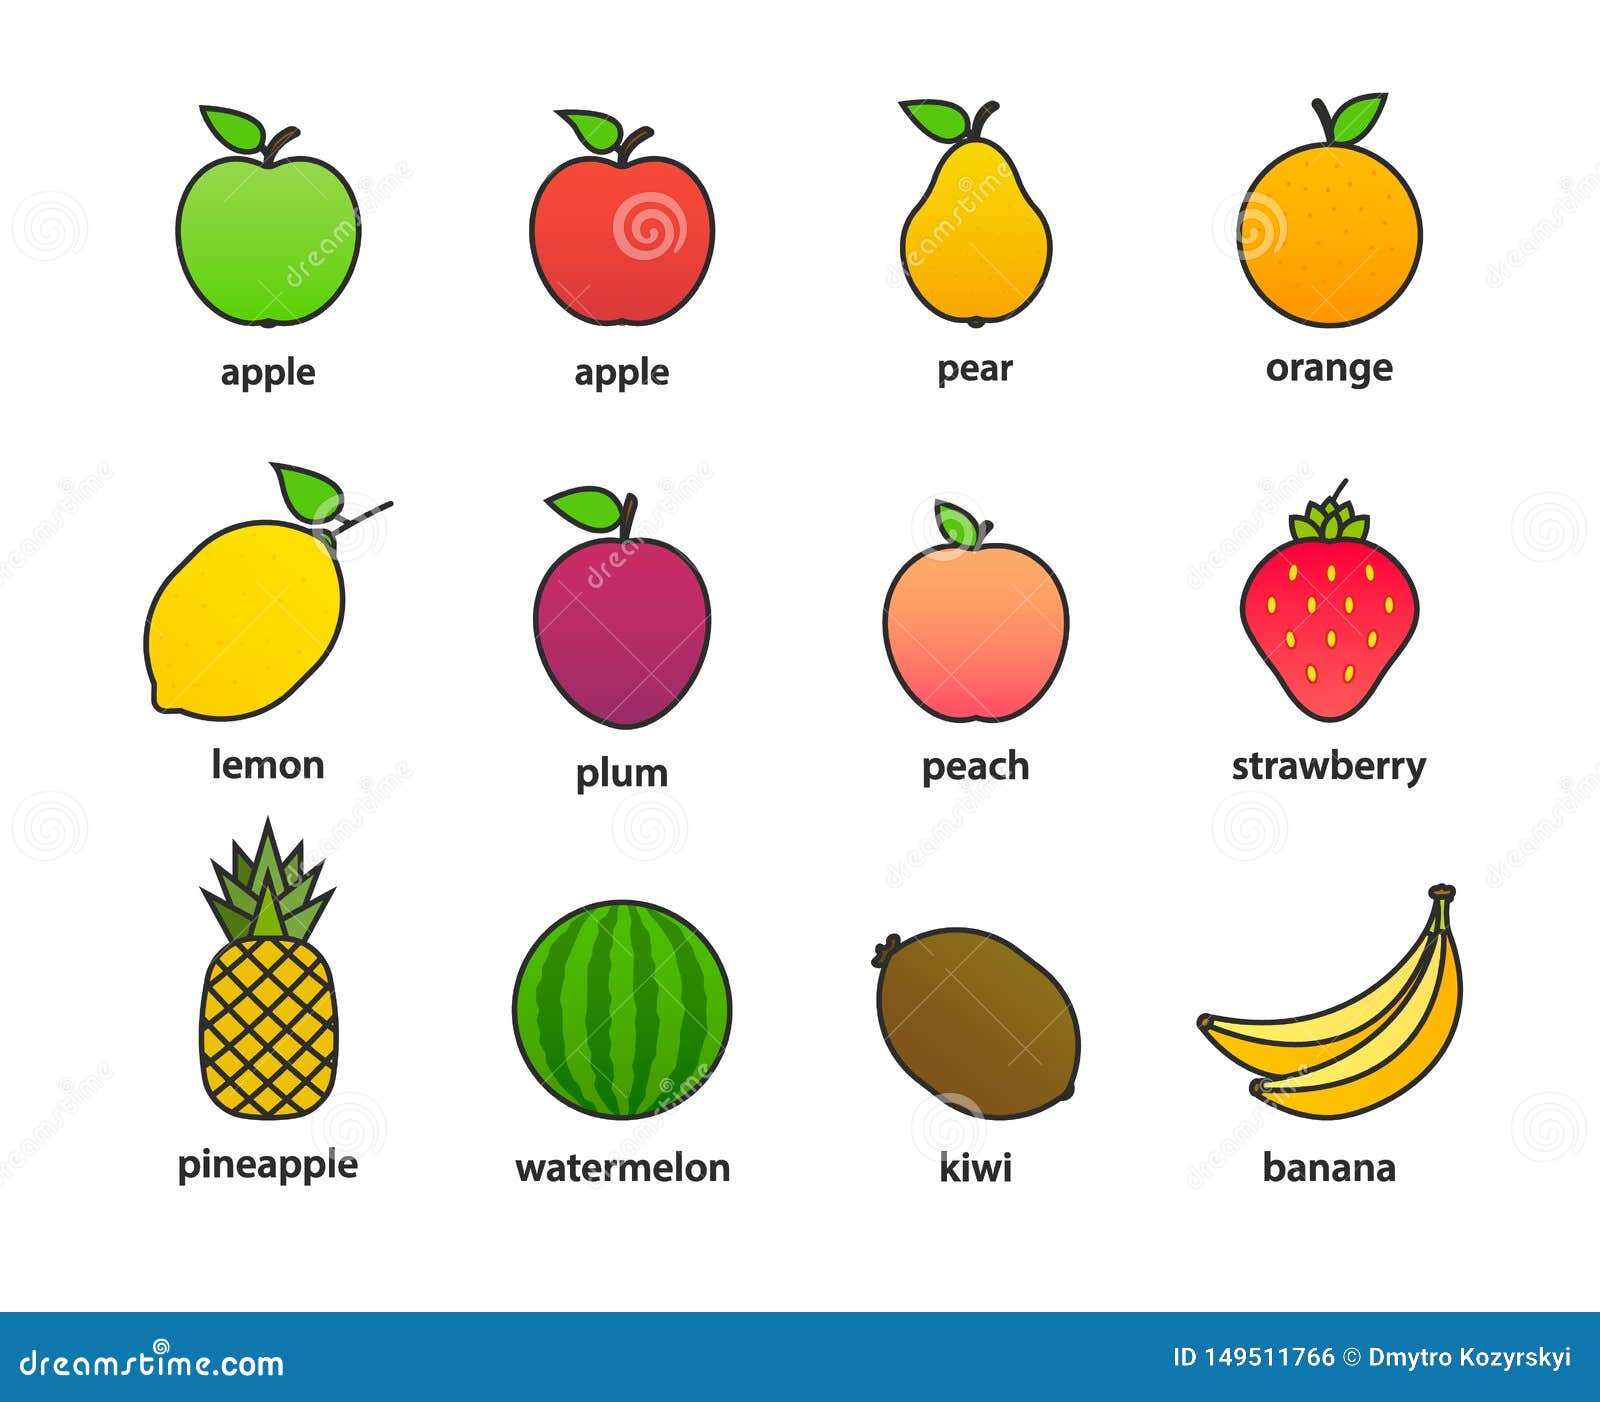 Как по английски будет апельсин. Apple Banana Plum Pear. Яблоко, банан, лимон, апельсин, груша, персик, киви. Яблоко банан ананас груша апельсин. Банан, апельсин ананас, яблоко, слива, груша.